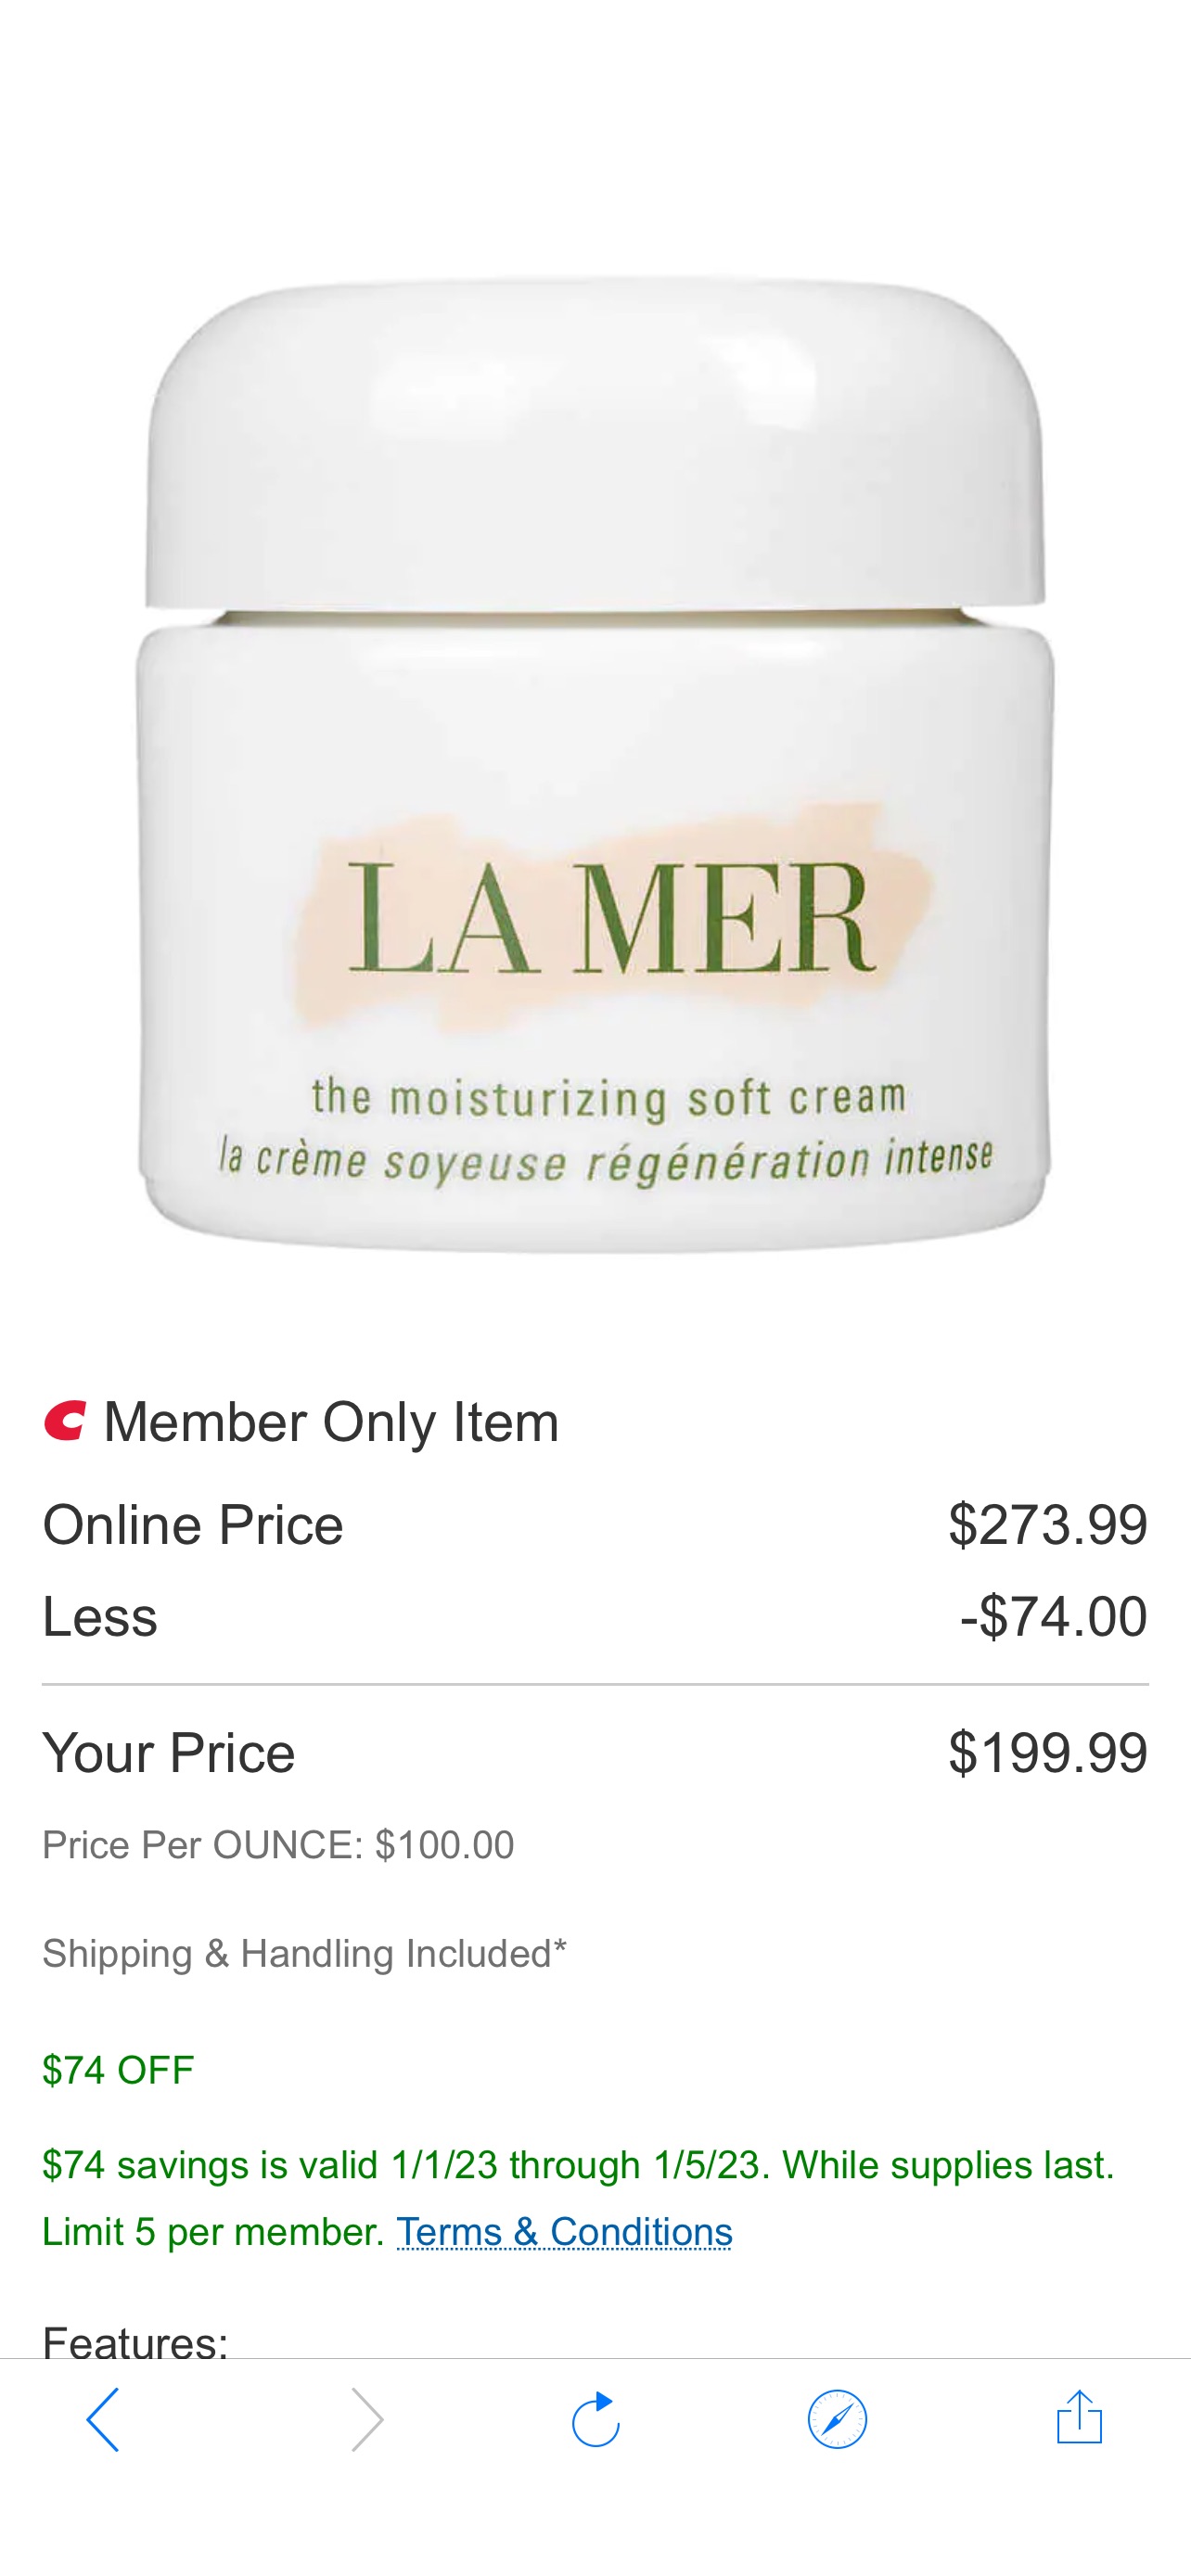 La Mer The Moisturizing Soft Cream, 2.0 oz | Costco 海蓝之谜面霜减价